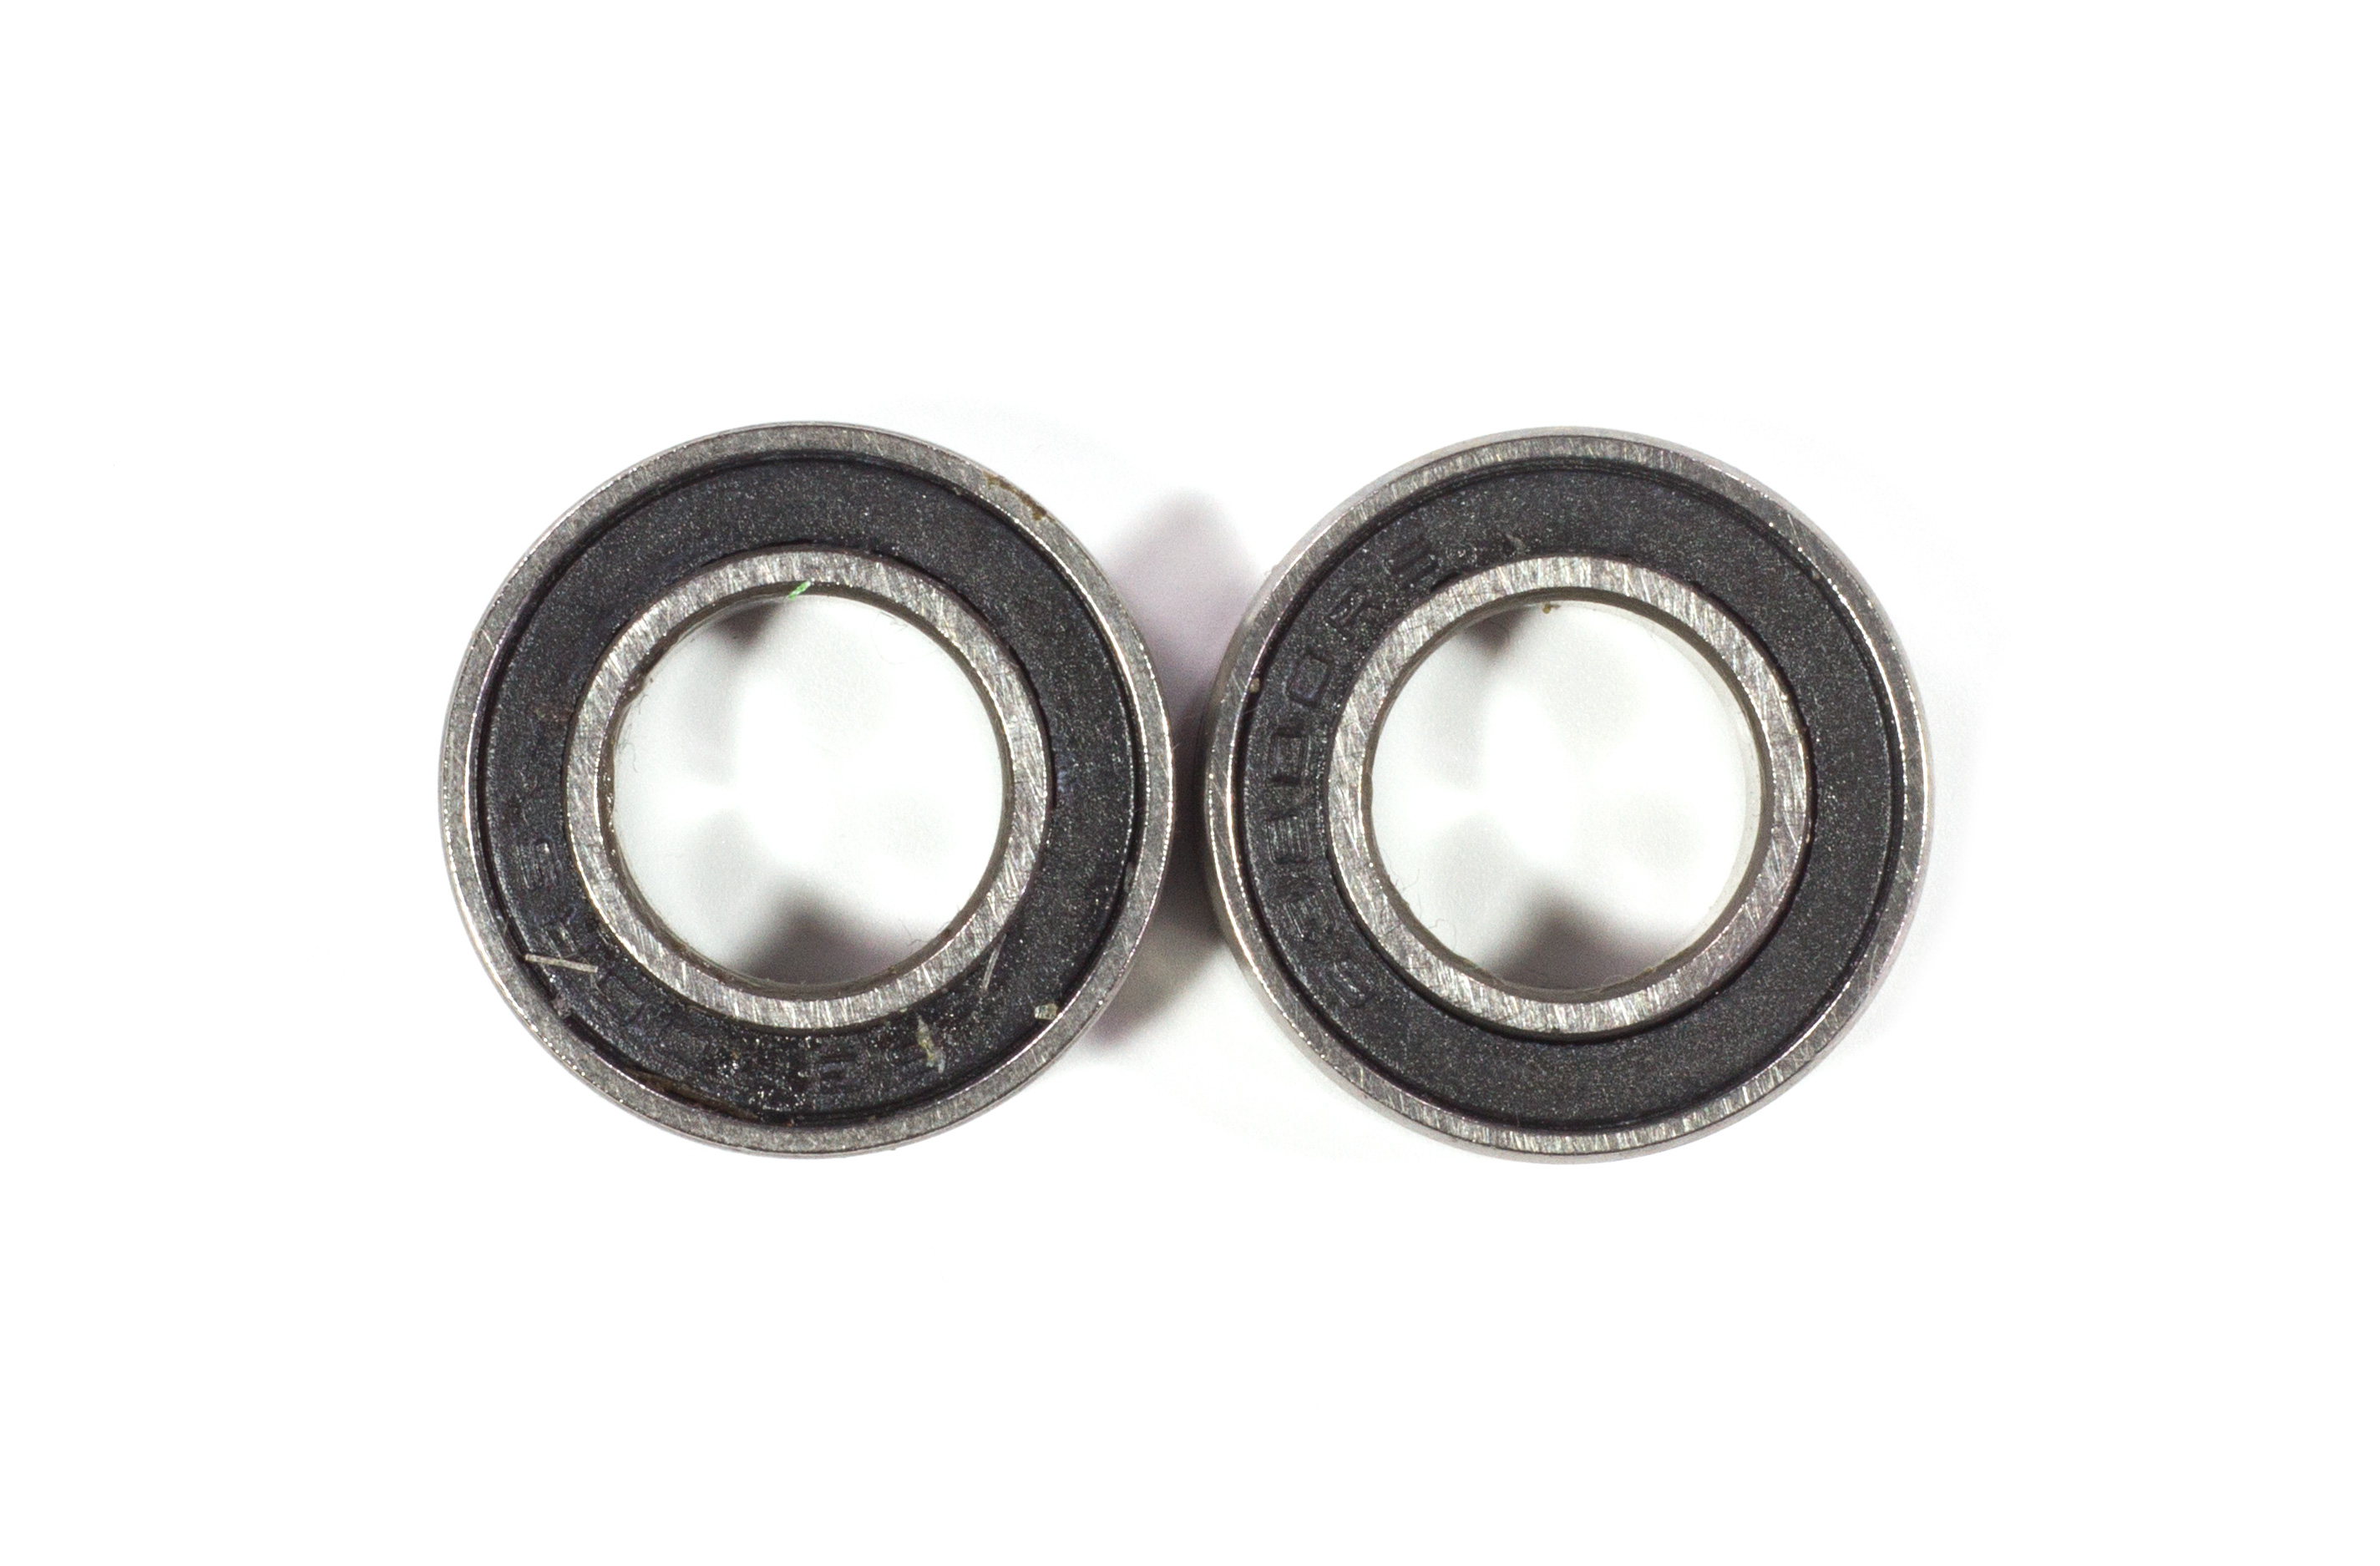 6036 FG Ceramic ball bearings, sealed 10x19x7 mm